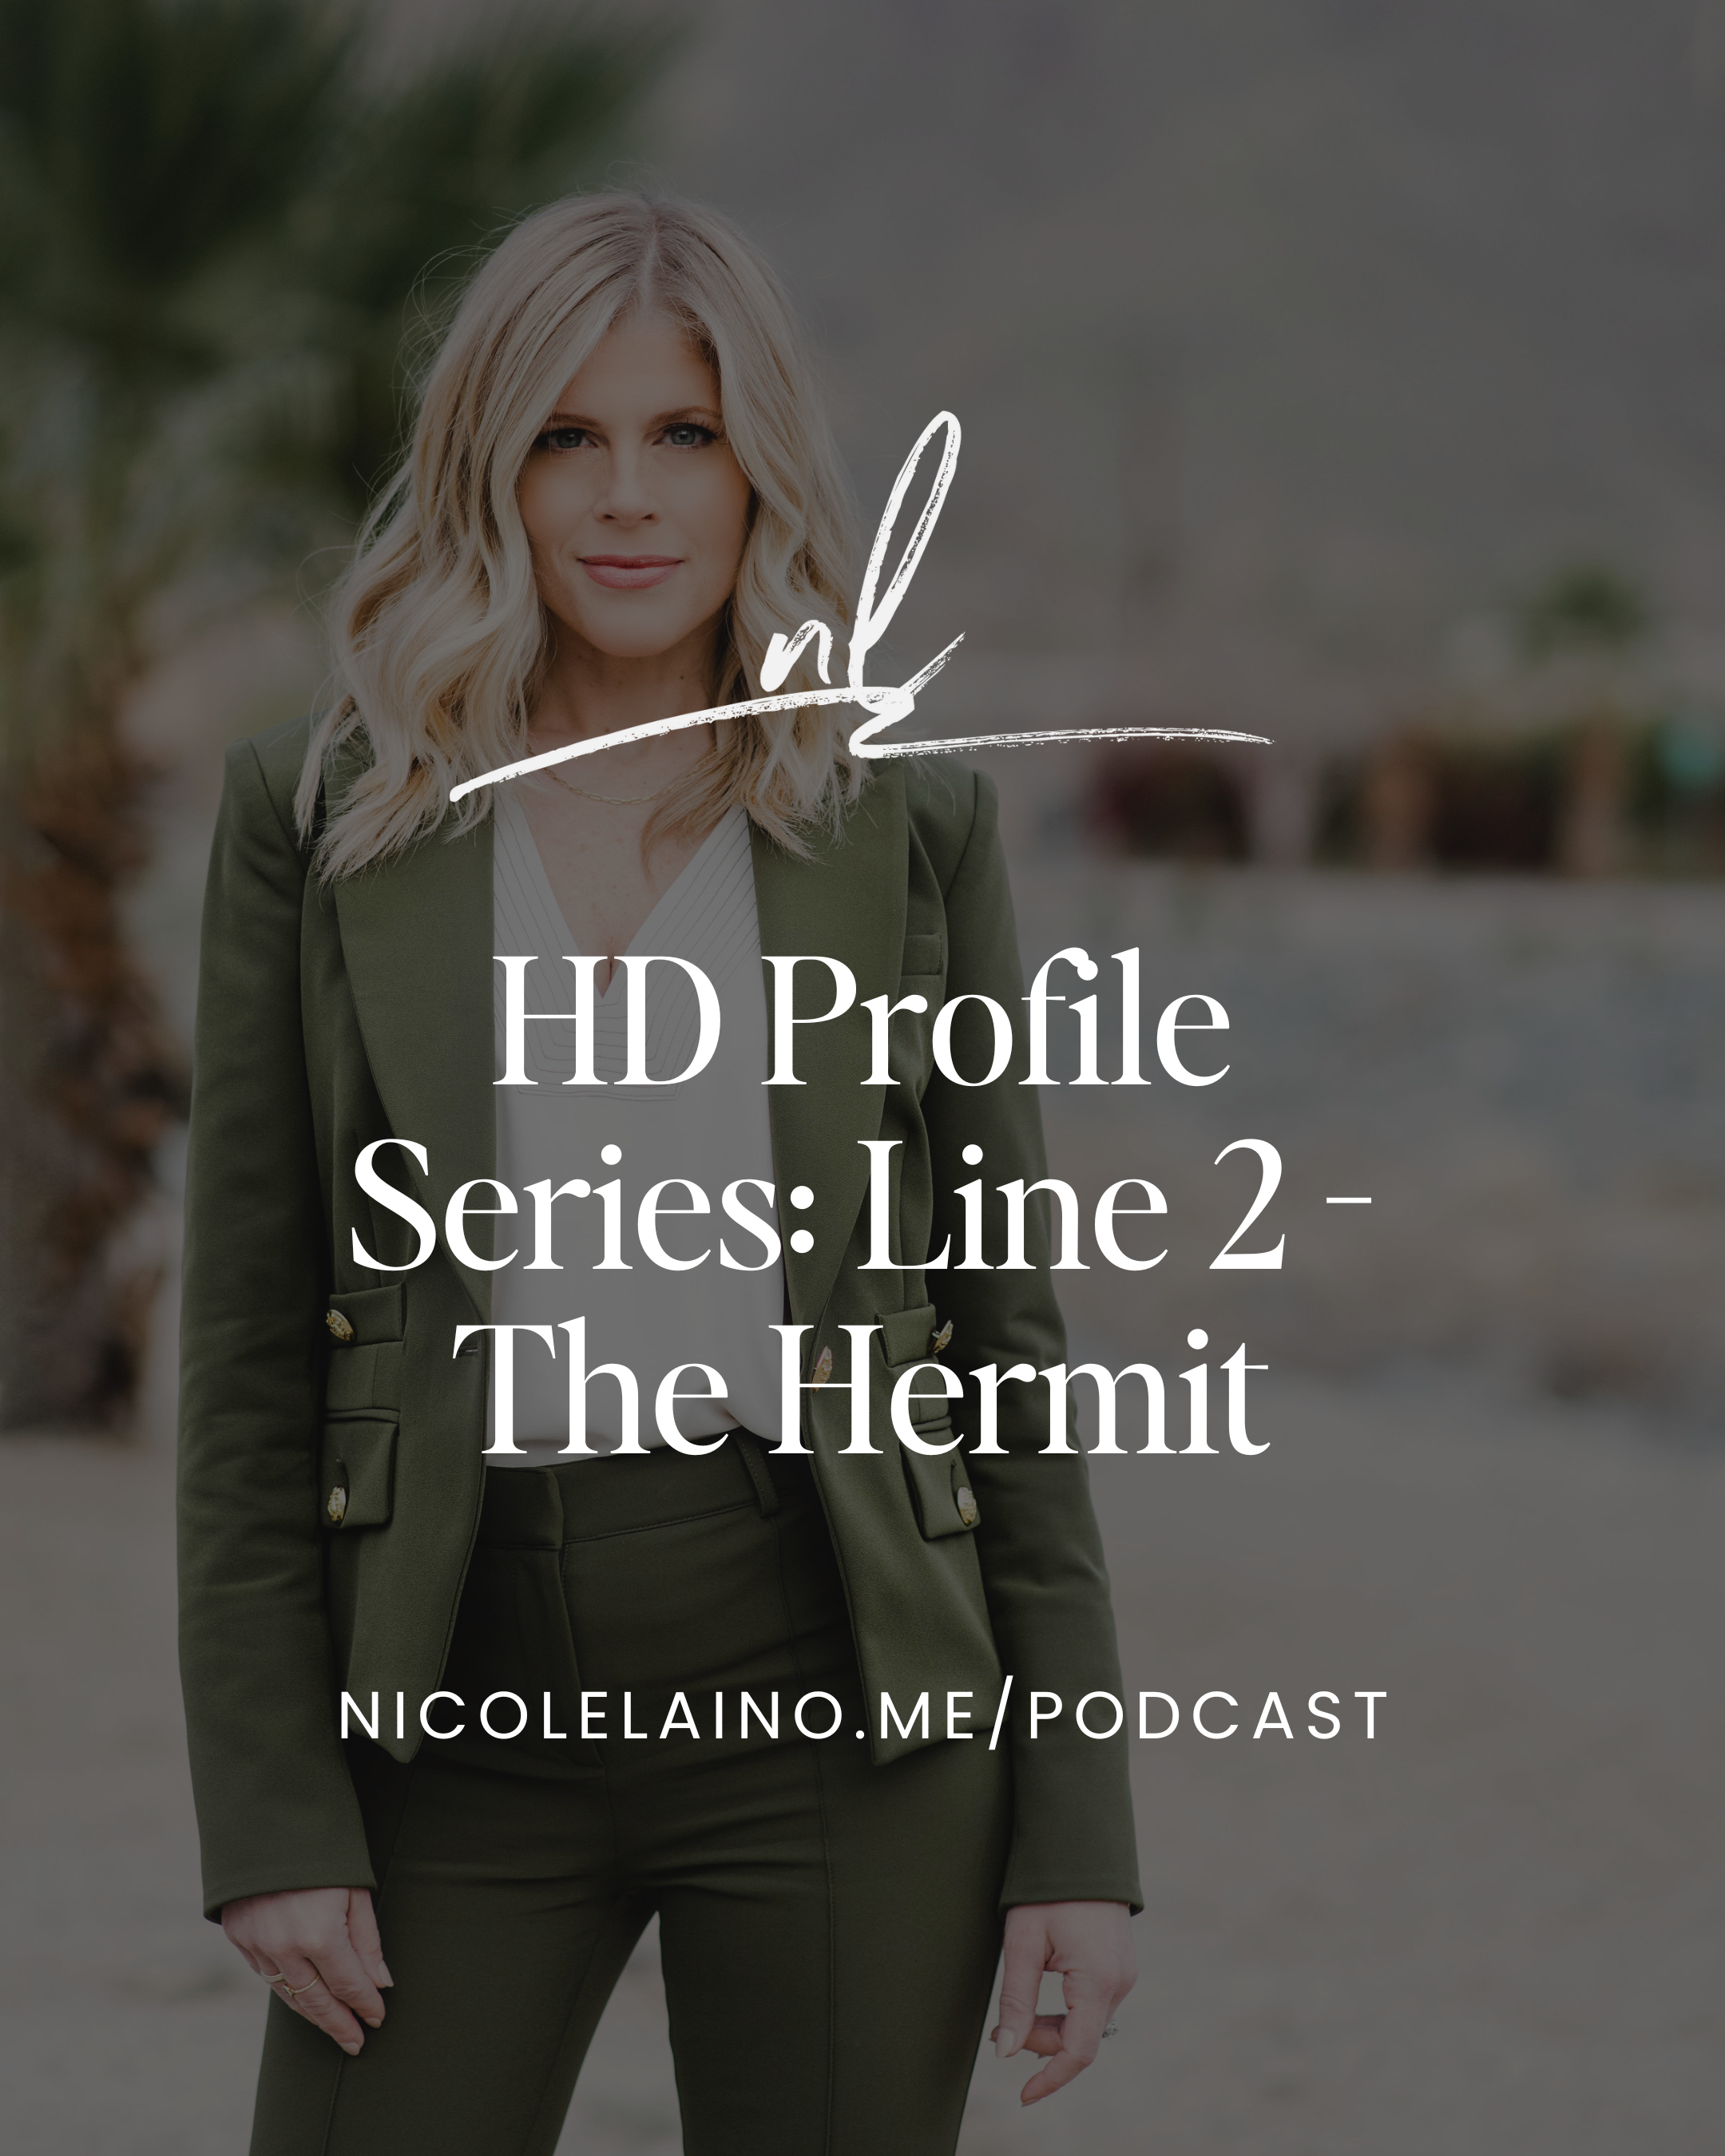 HD Profile Series: Line 2 - The Hermit